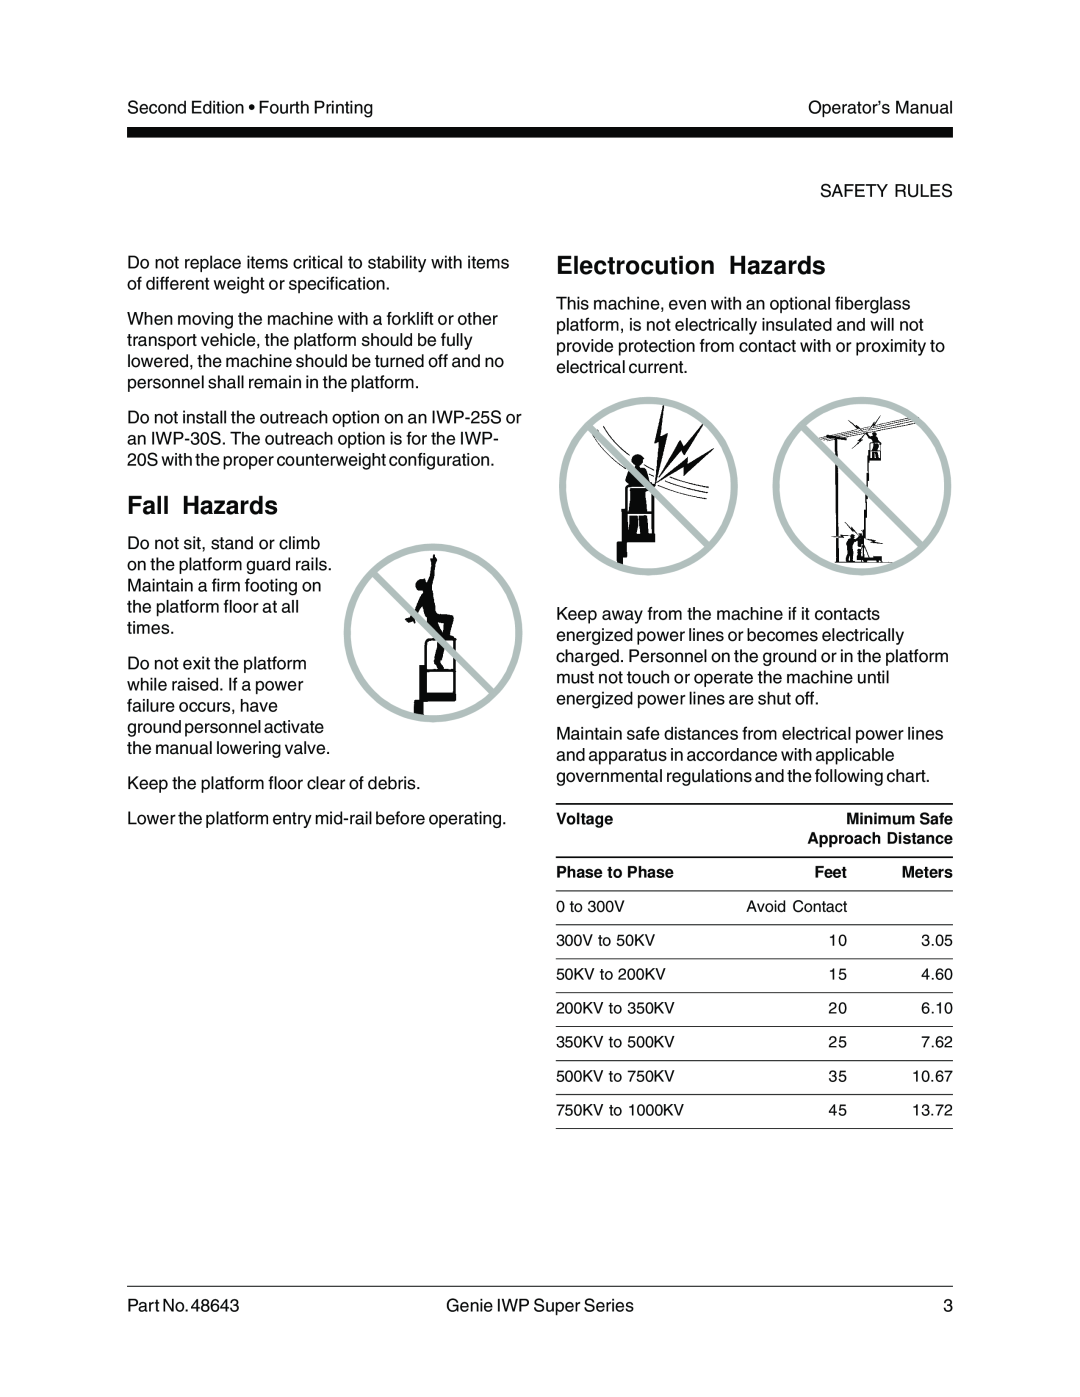 Genie 48643 manual Fall Hazards, Electrocution Hazards 